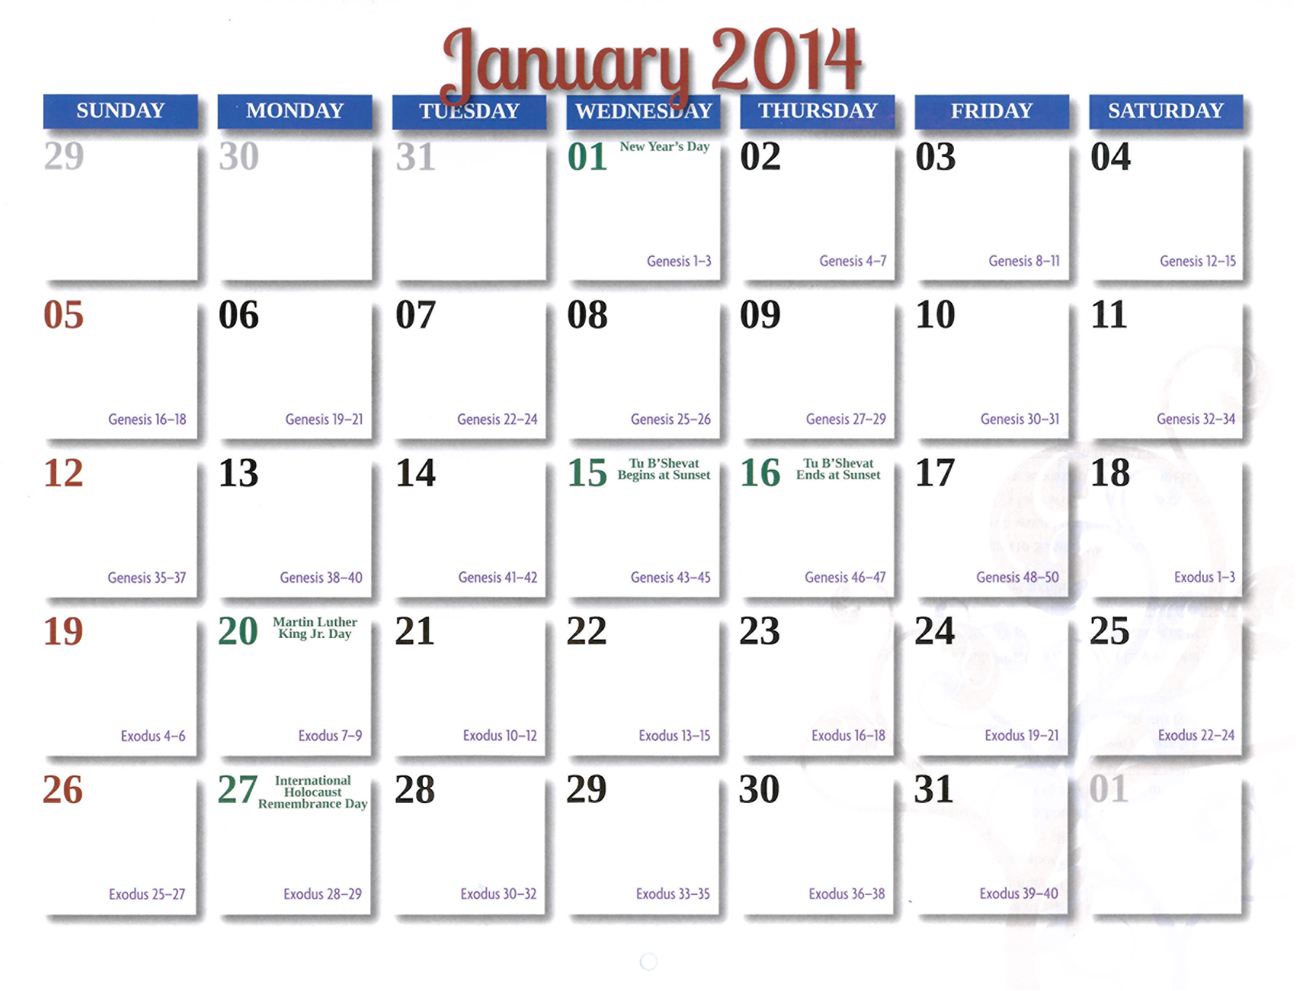 2014 Prophecy Calendar: January - Prophecies of Moses